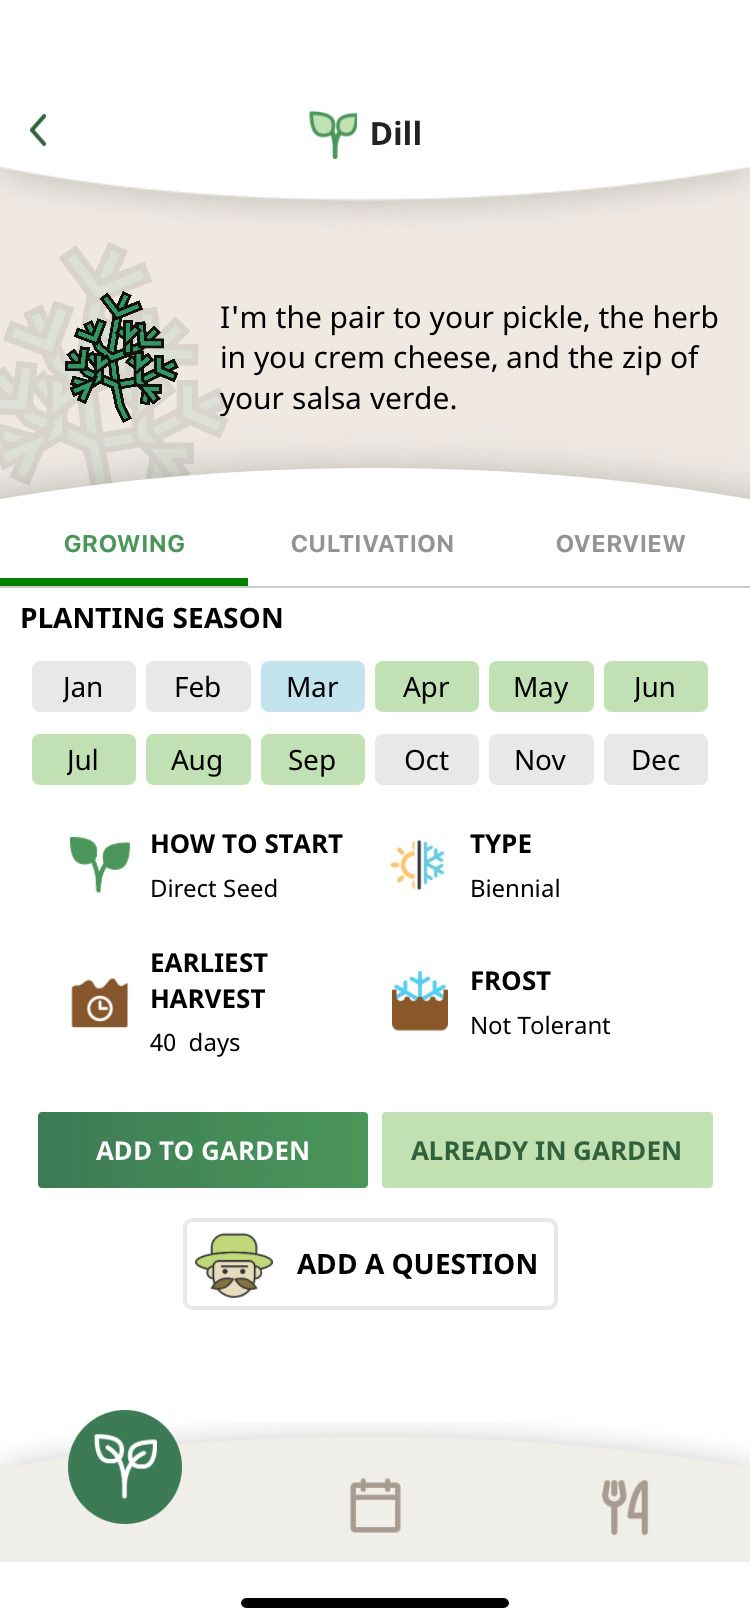 Farm Your Yard app dill screen